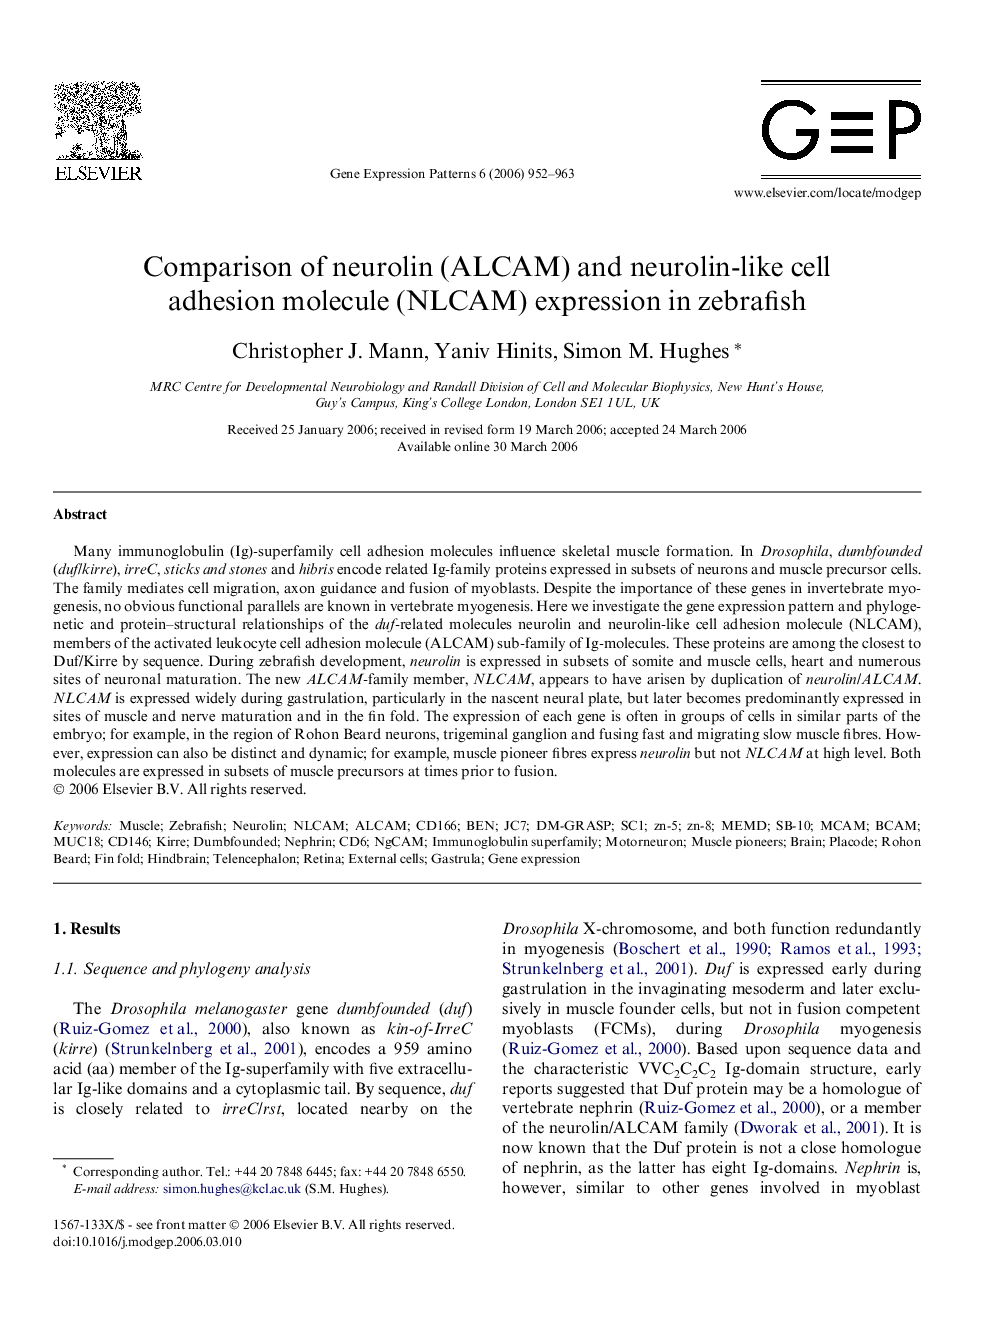 Comparison of neurolin (ALCAM) and neurolin-like cell adhesion molecule (NLCAM) expression in zebrafish